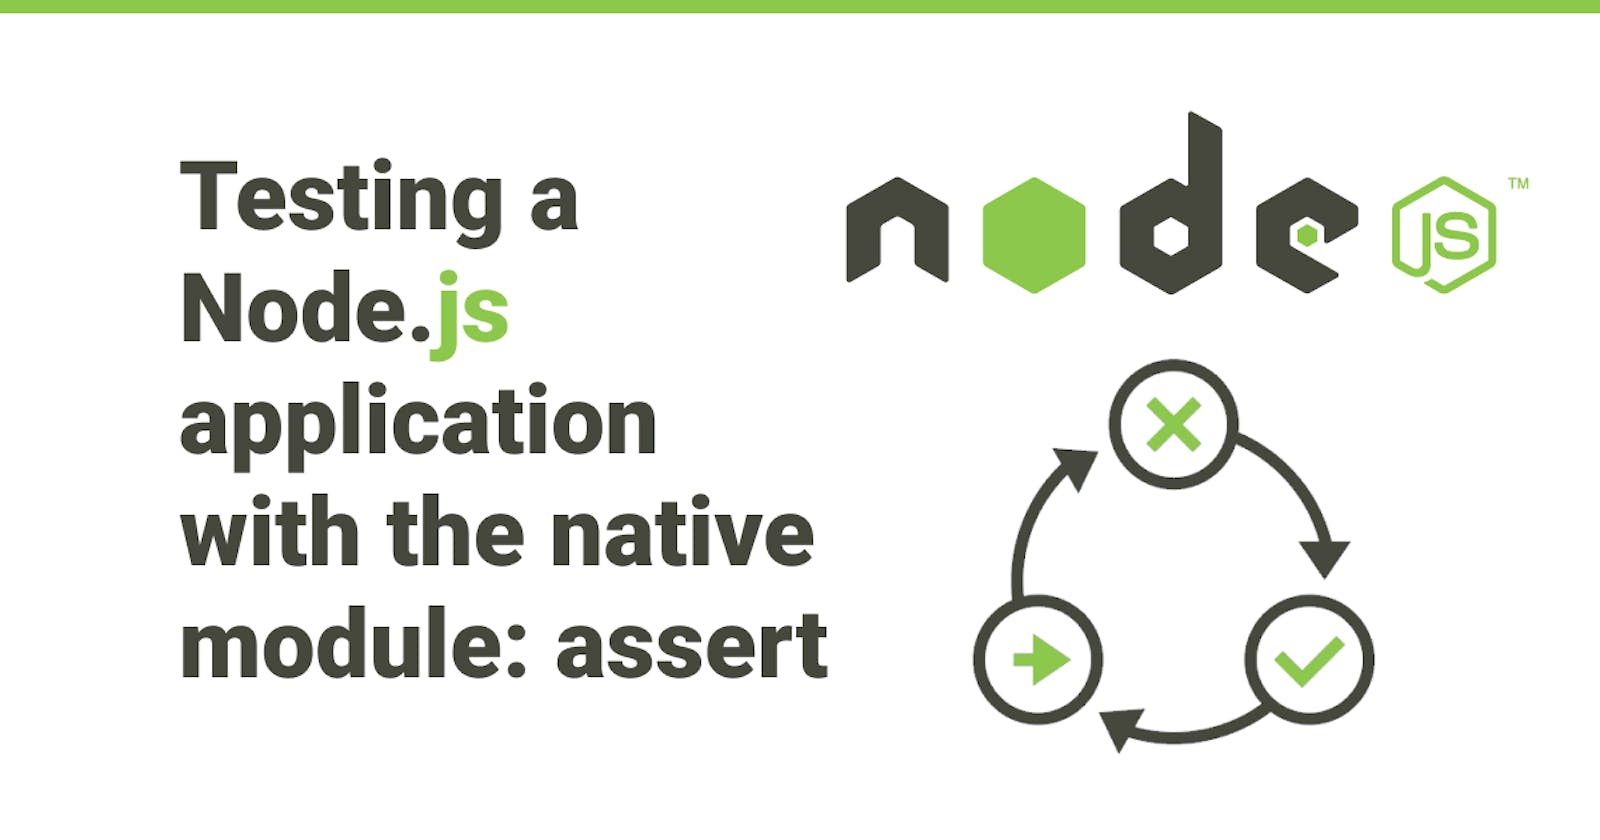 Testing a Node.js application with the native module: assert